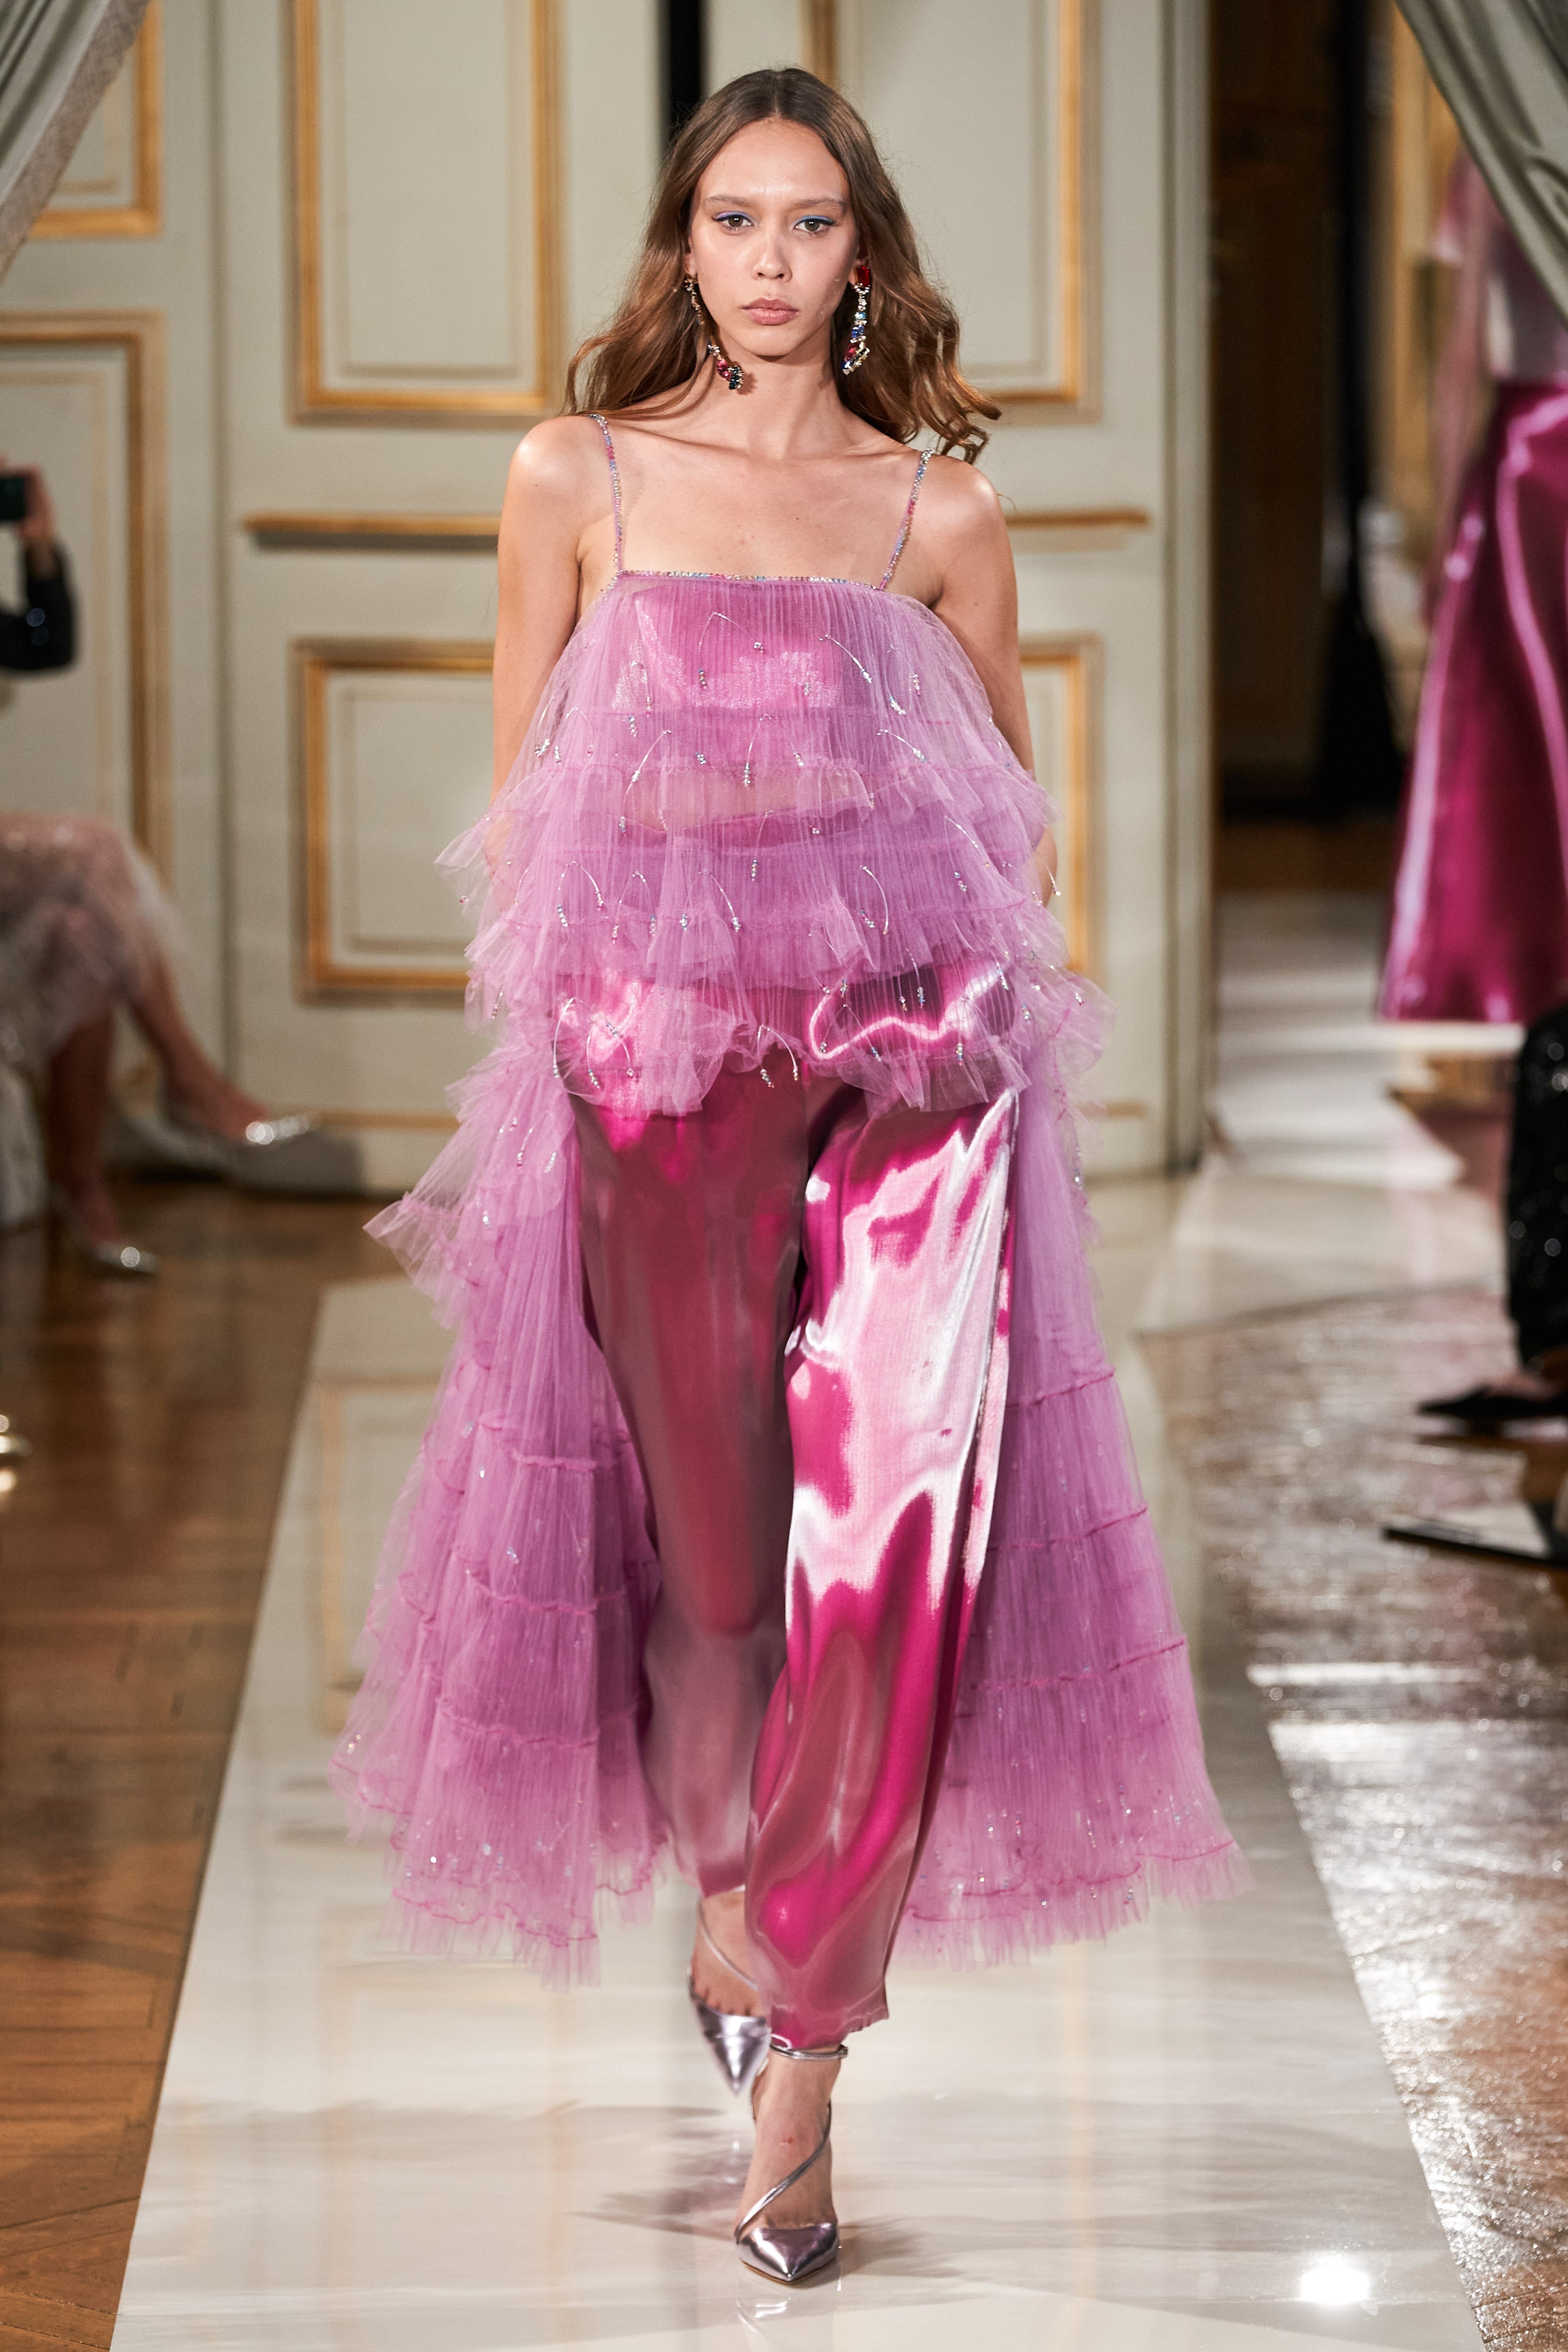 Pictures of the Day: Giorgio Armani showcases elegant haute couture designs  at Paris fashion week